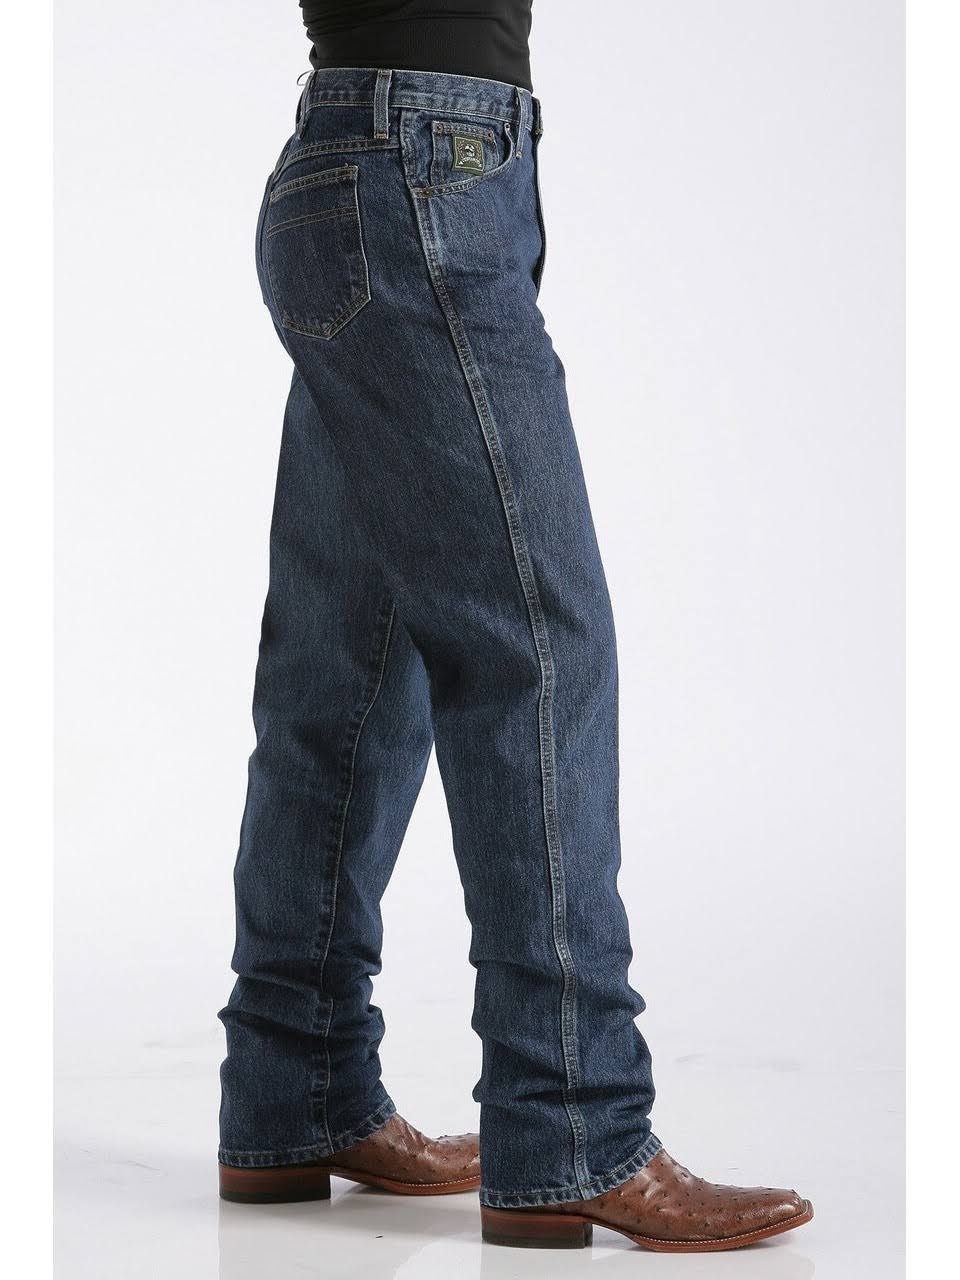 Cinch Jeans - Green Label Original Fit Dark Stonewash - WGL-03